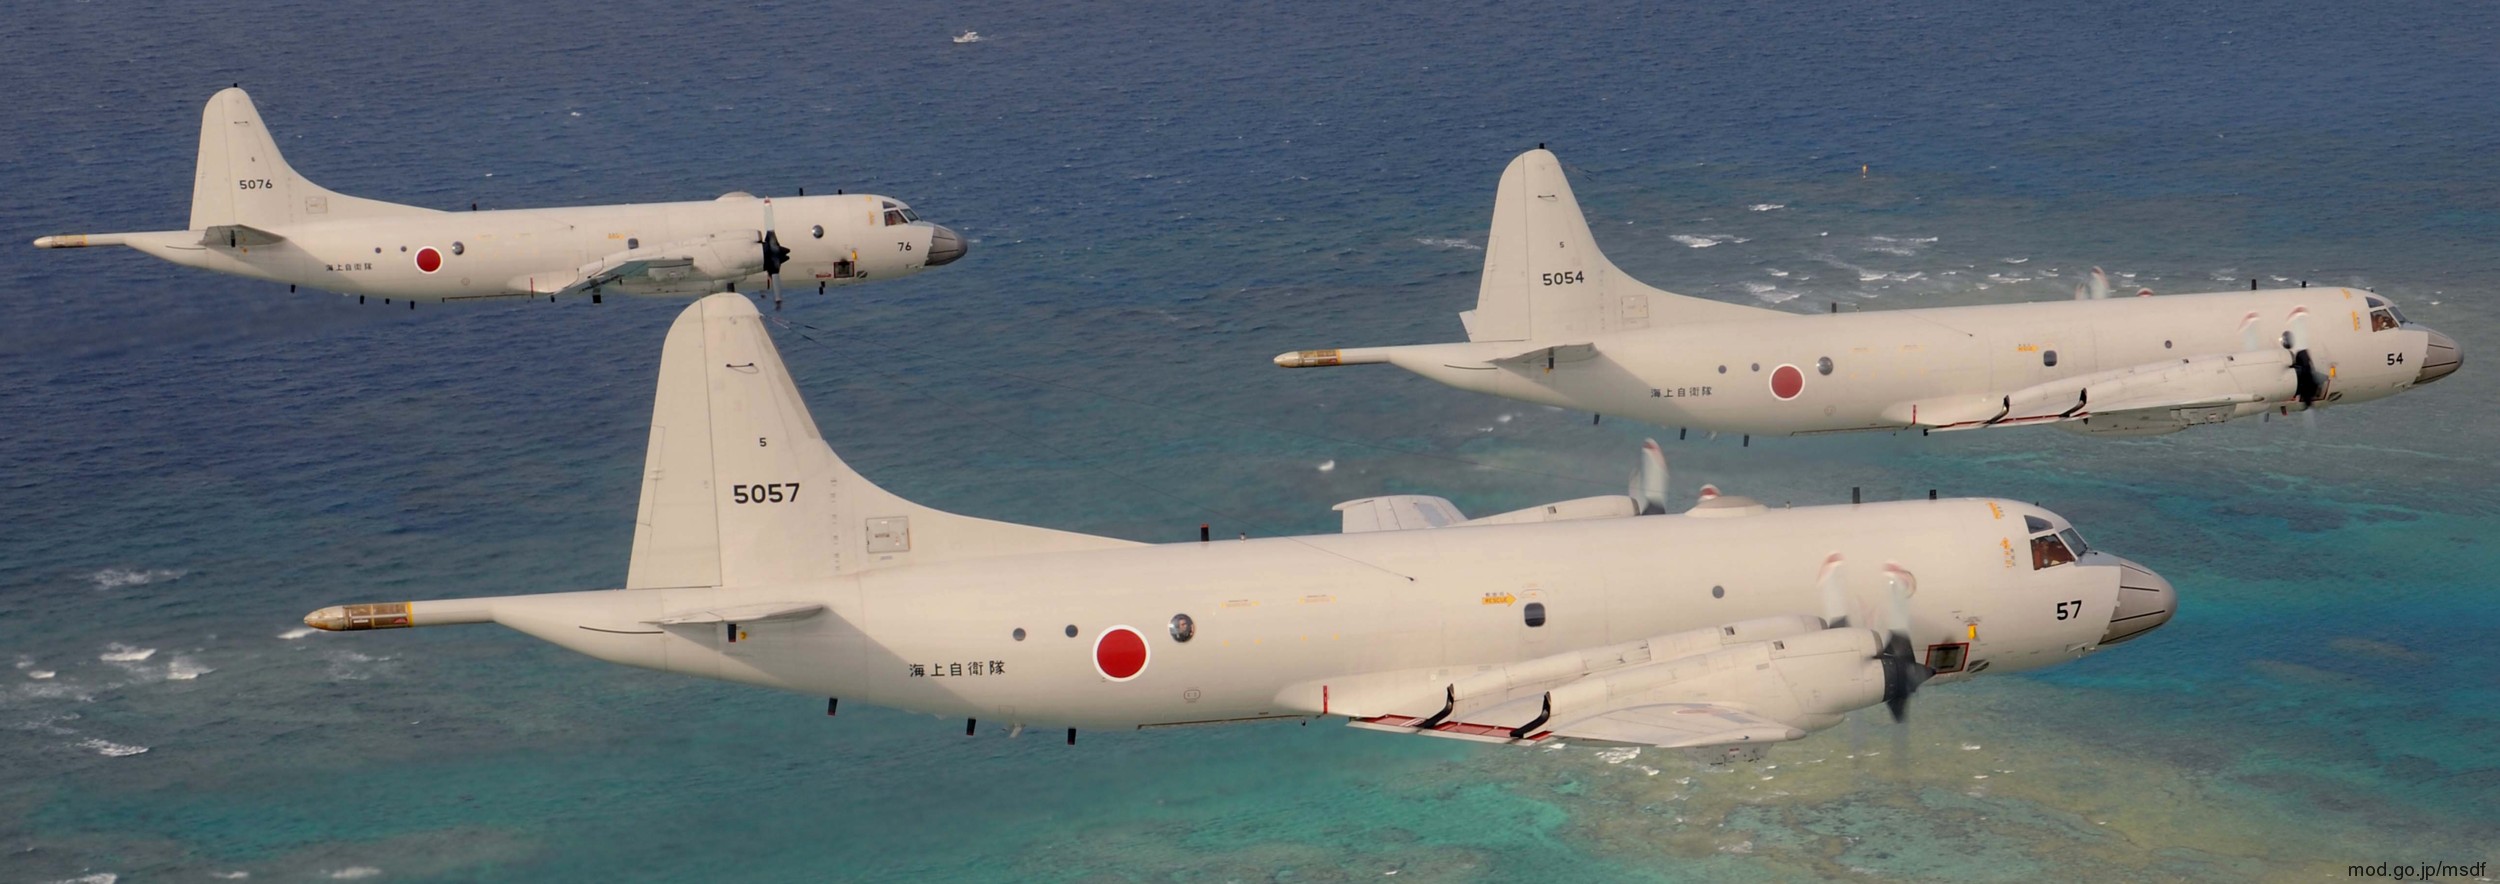 kawasaki p-3c orion patrol aircraft mpa japan maritime self defense force jmsdf 5057 03